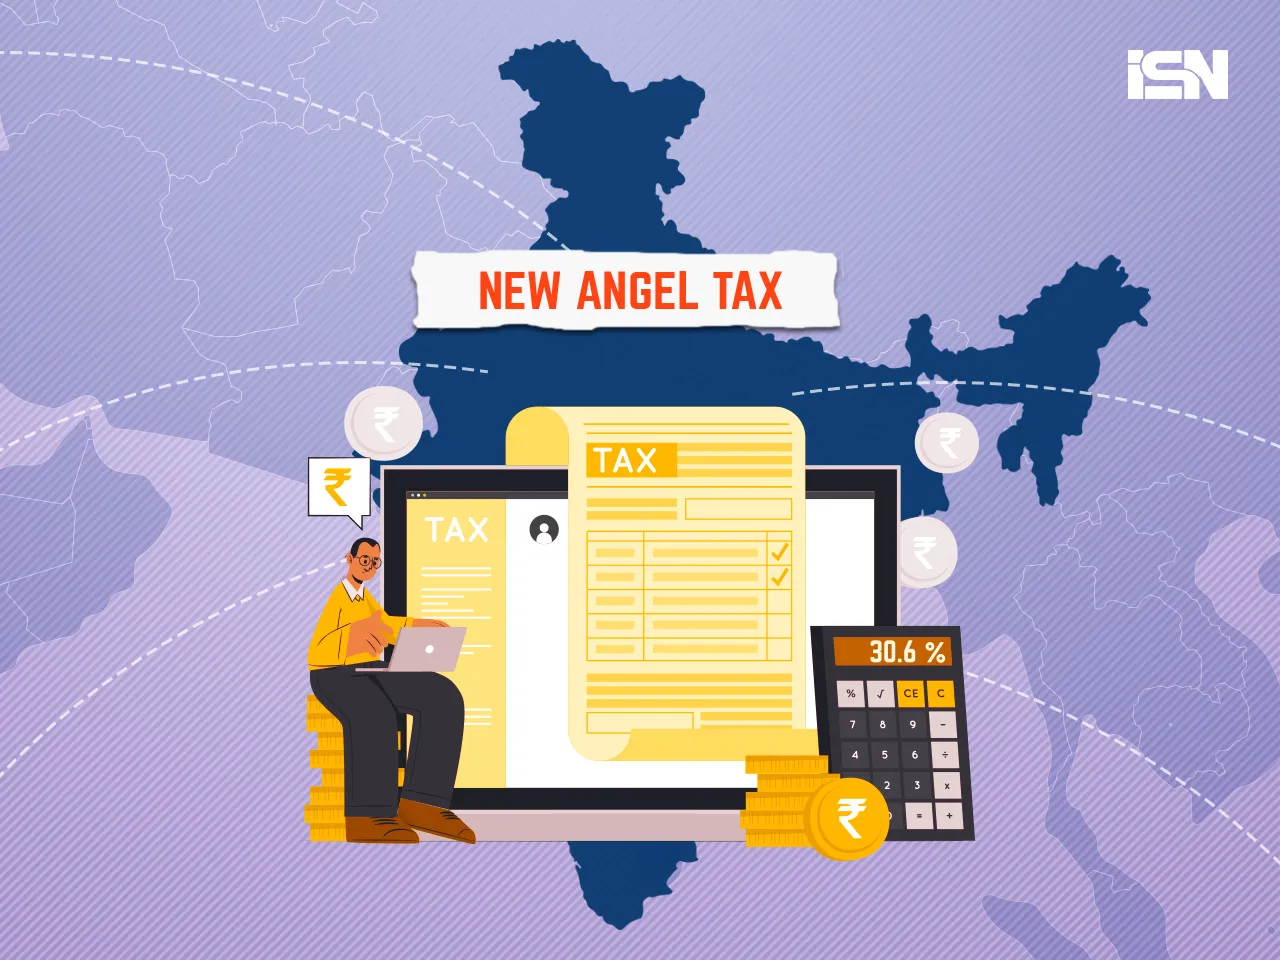 IT dept notifies new angel tax